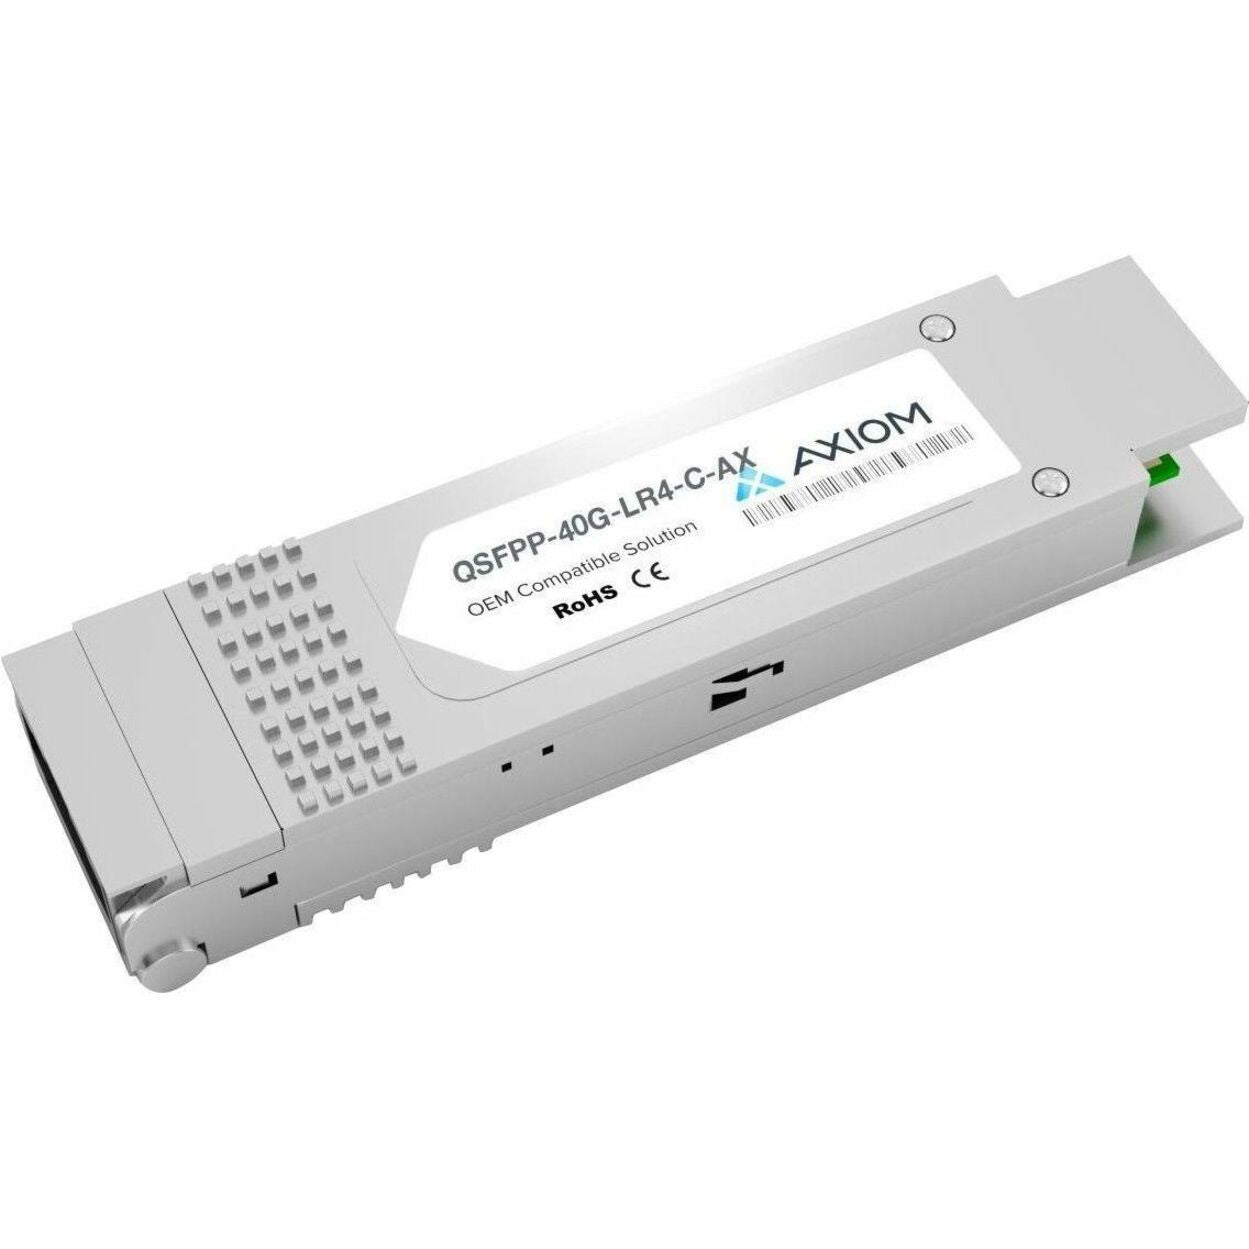 Axiom QSFPP-40G-LR4-C-AX 40GBASE-LR4 QSFP+ Transceiver for Juniper, 40 Gigabit Ethernet, Single-mode, 32808.40 ft Maximum Distance Supported